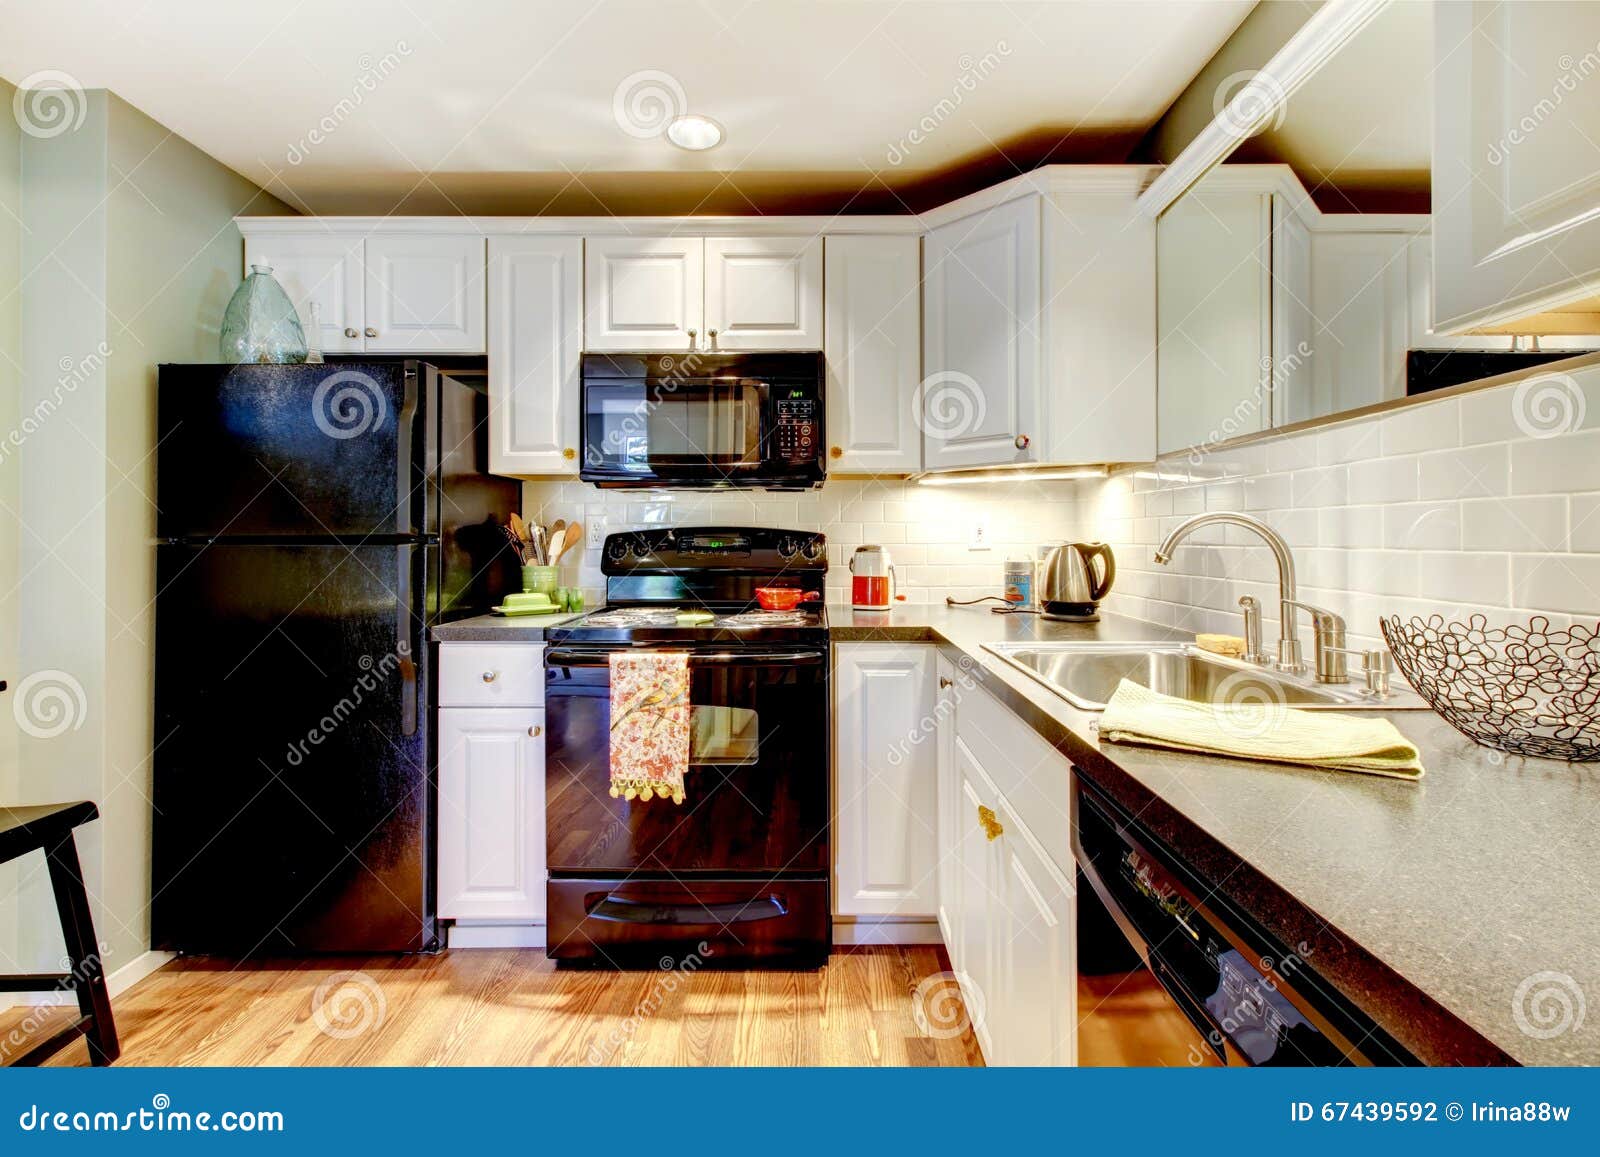 Bright kitchen interior with modern white furniture, pastel mint fridge  Stock Photo by bialasiewicz